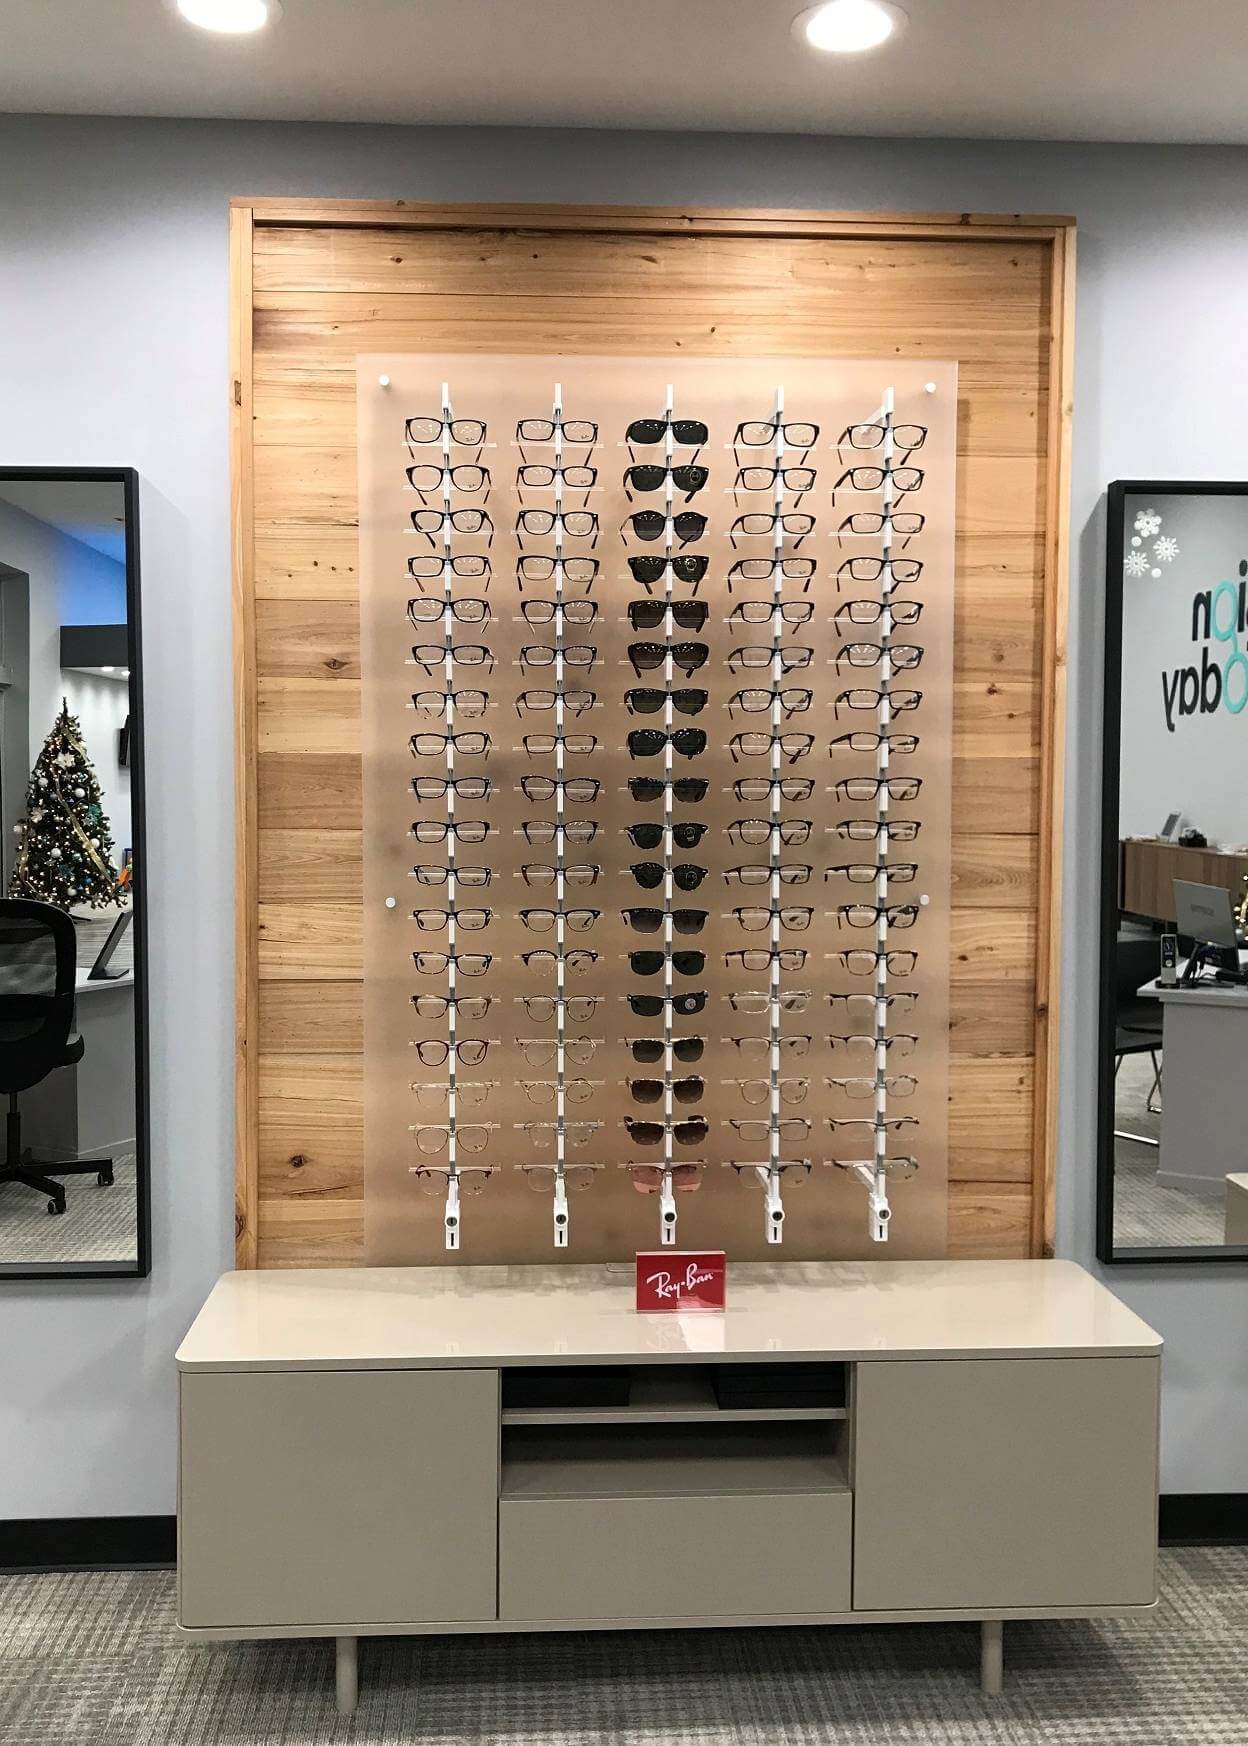 RayBan eyeglass display.jpg